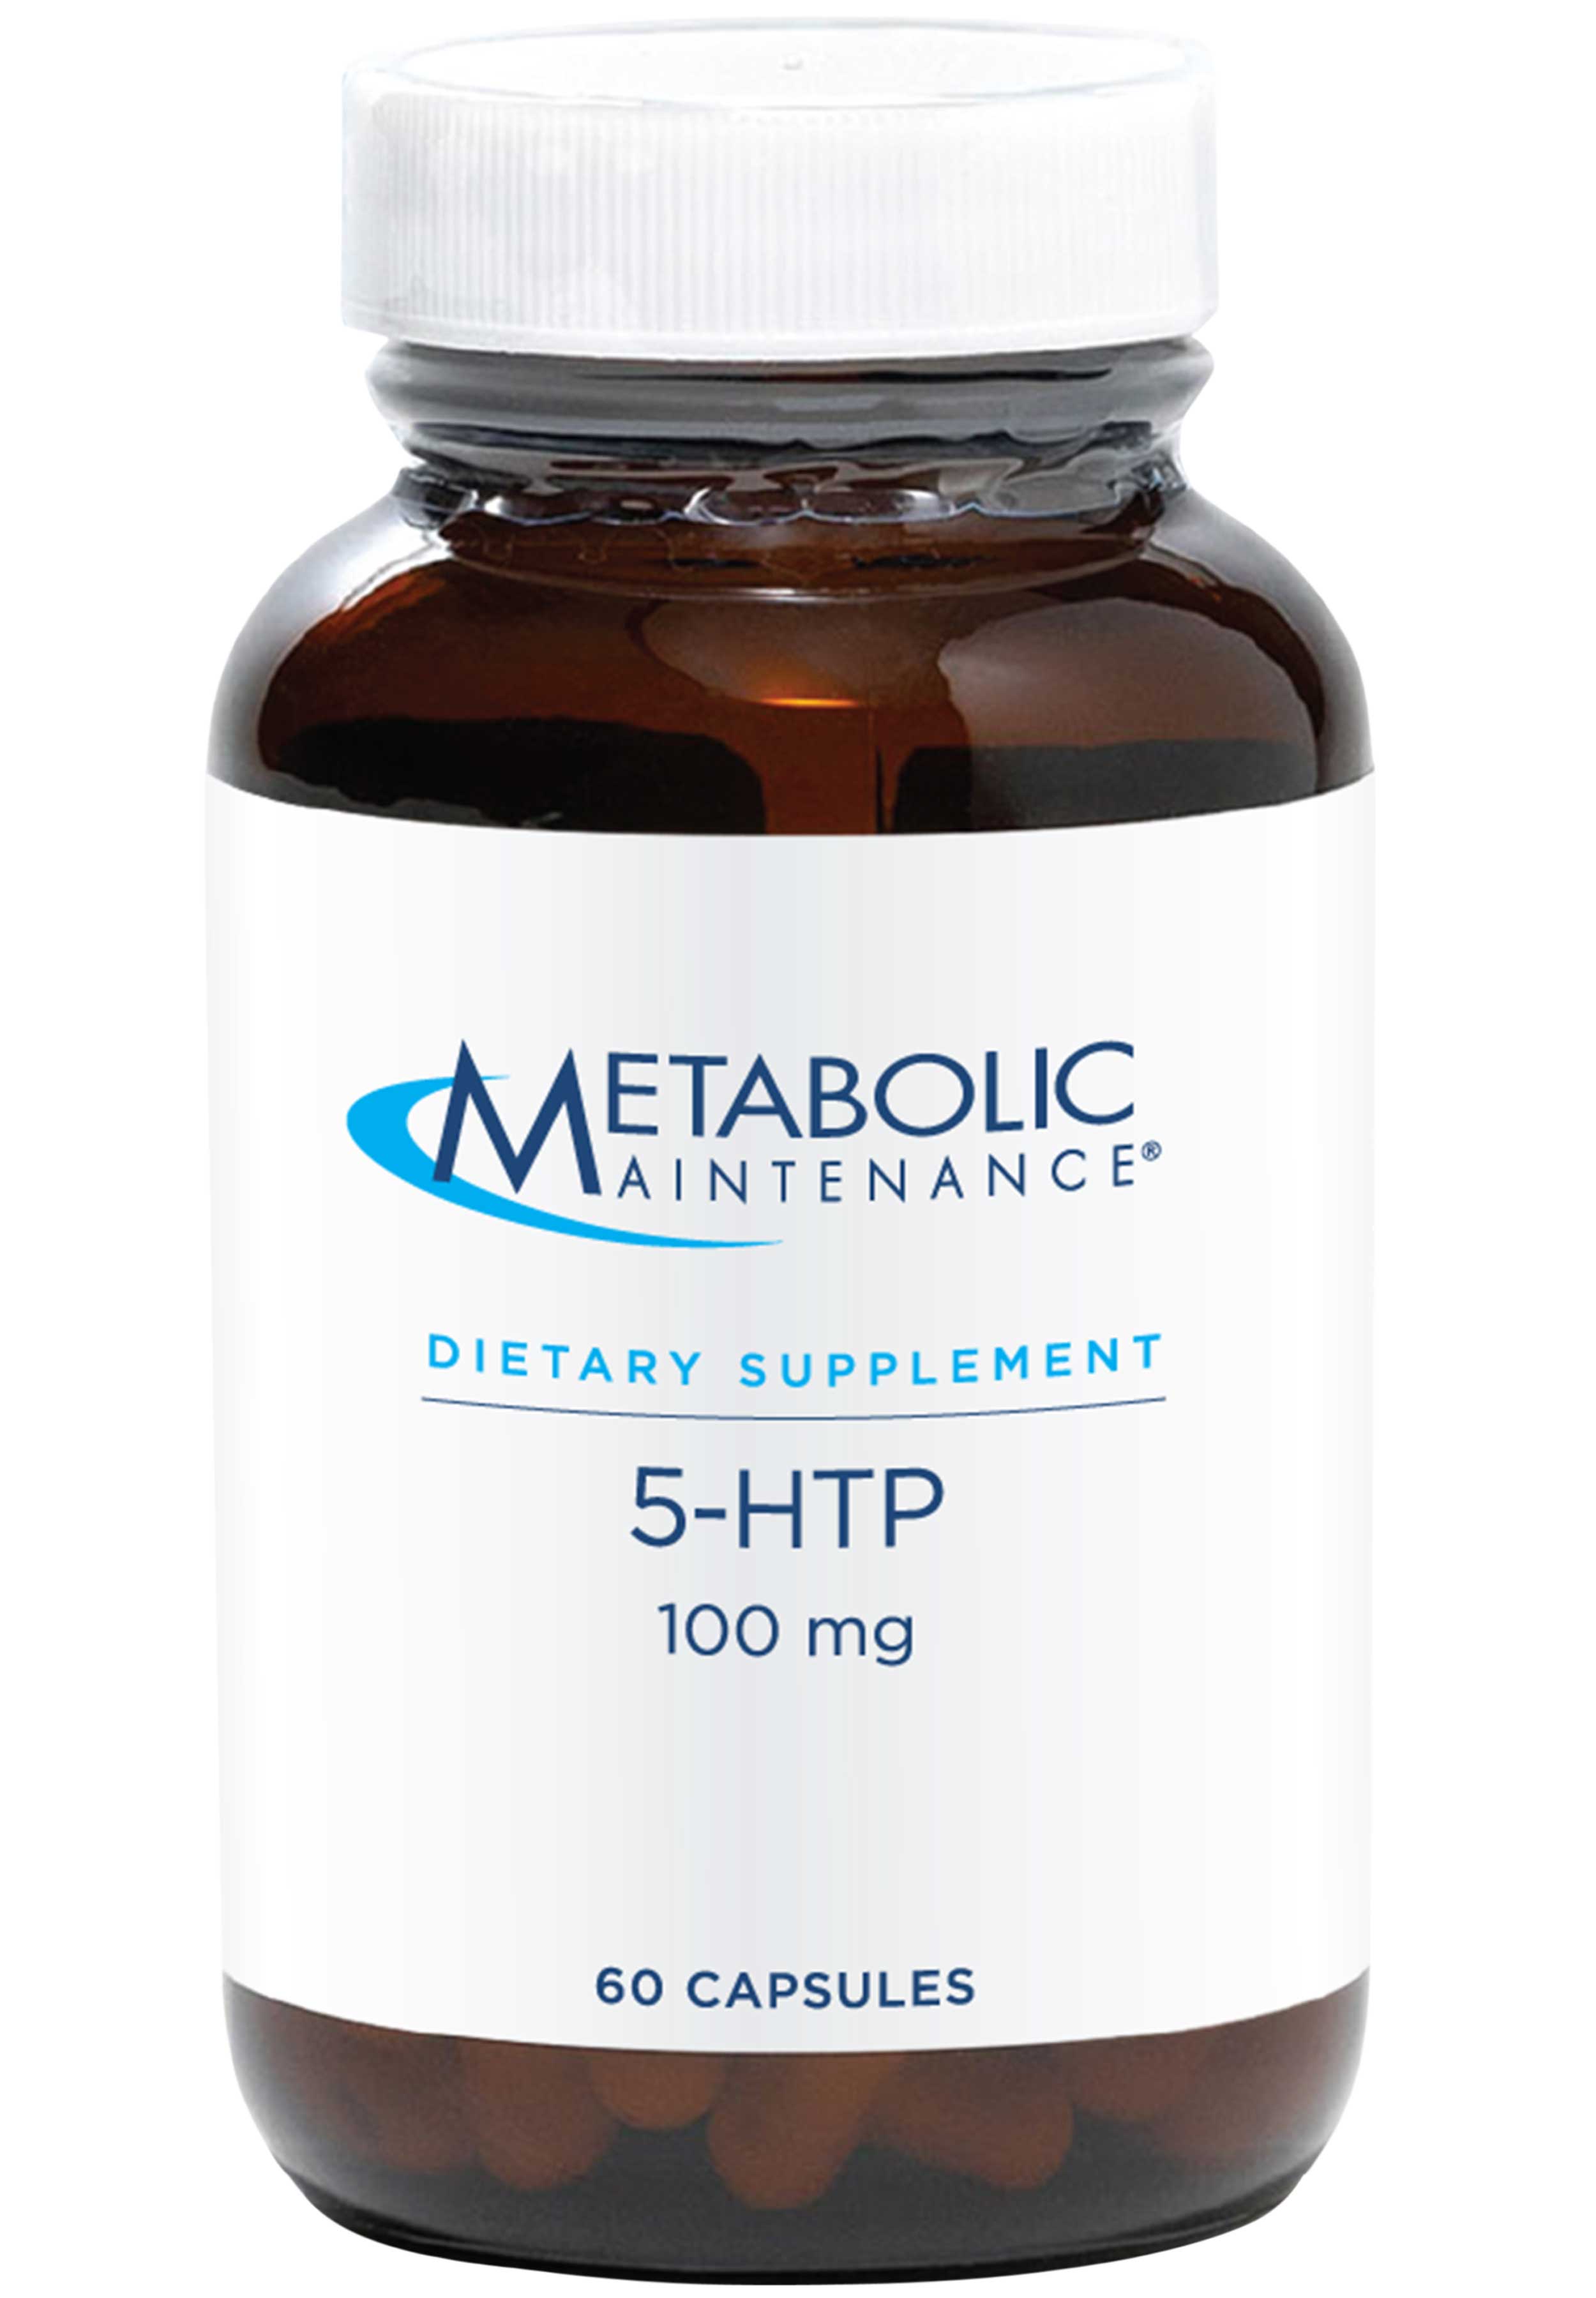 Metabolic Maintenance 5-HTP 100 mg